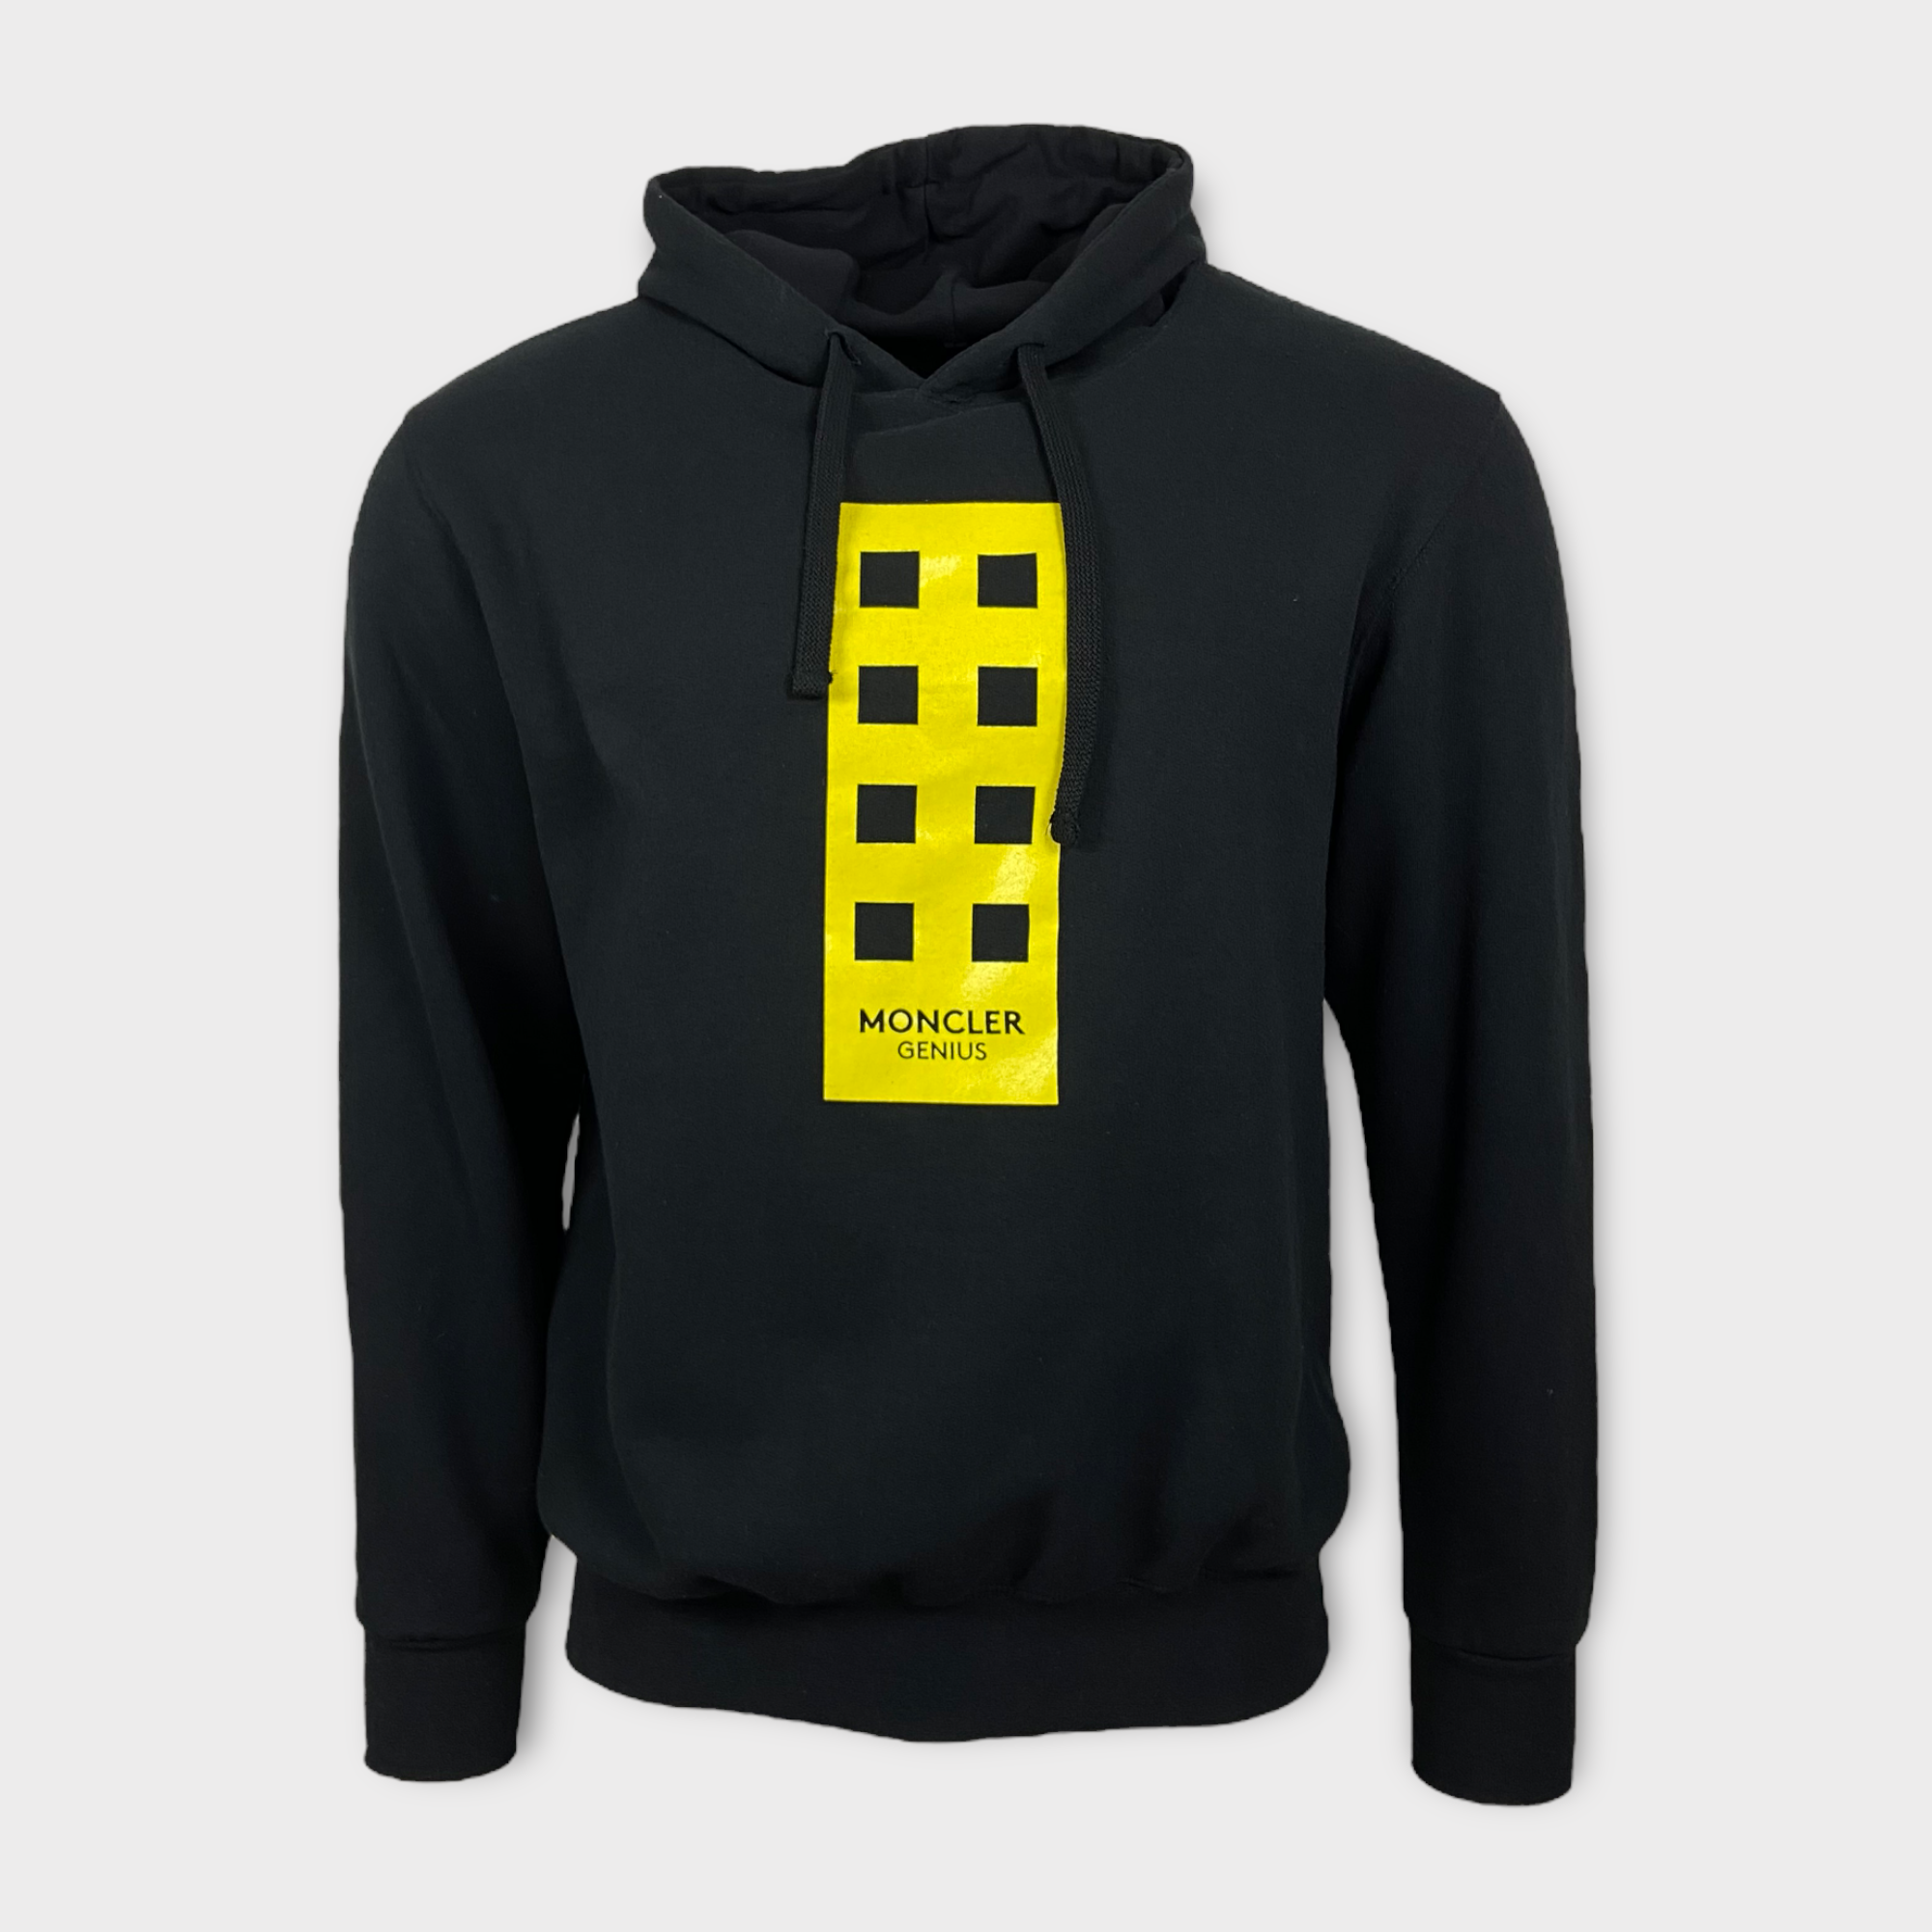 Moncler Genius Event VIP hoodie - Size L (Fits M)